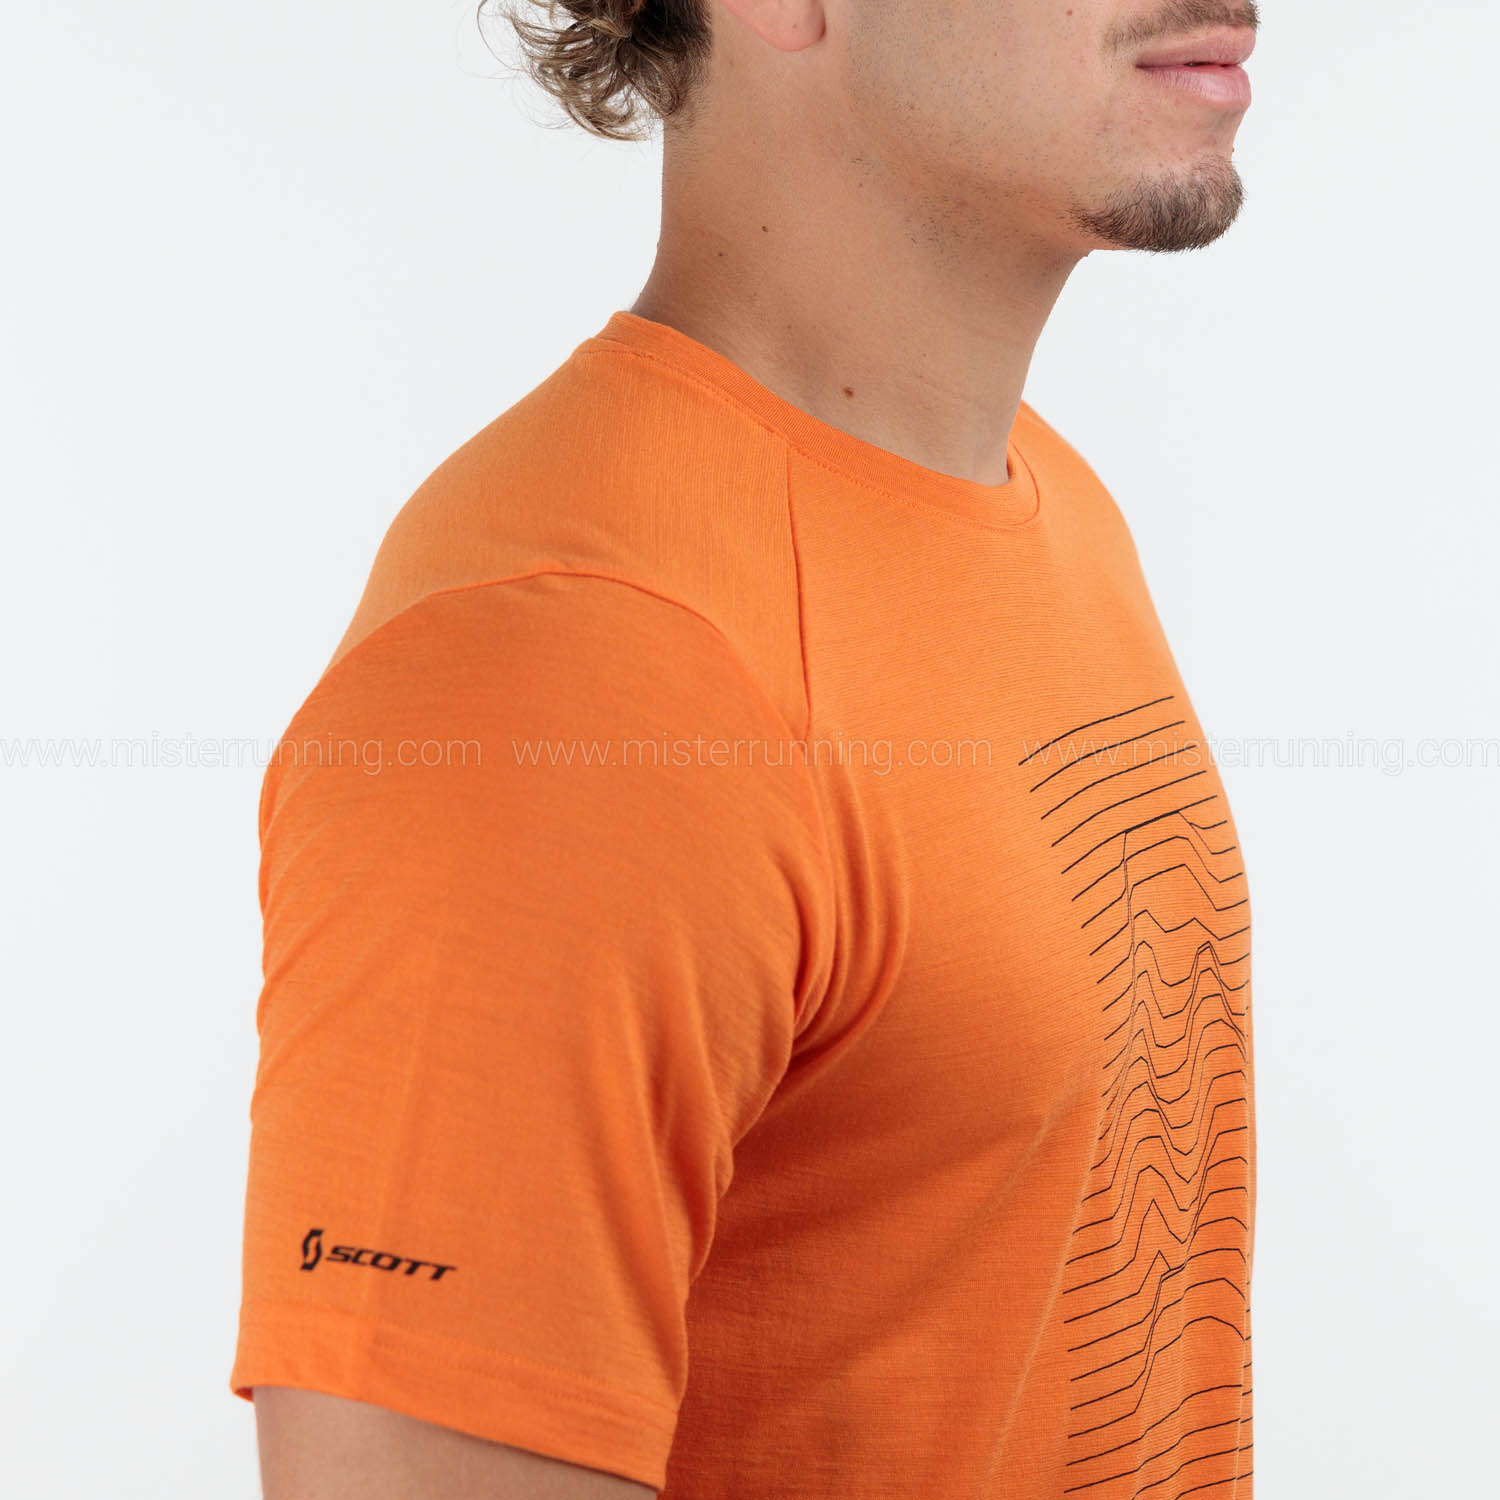 Scott Defined Merino Graphic T-Shirt - Flash Orange